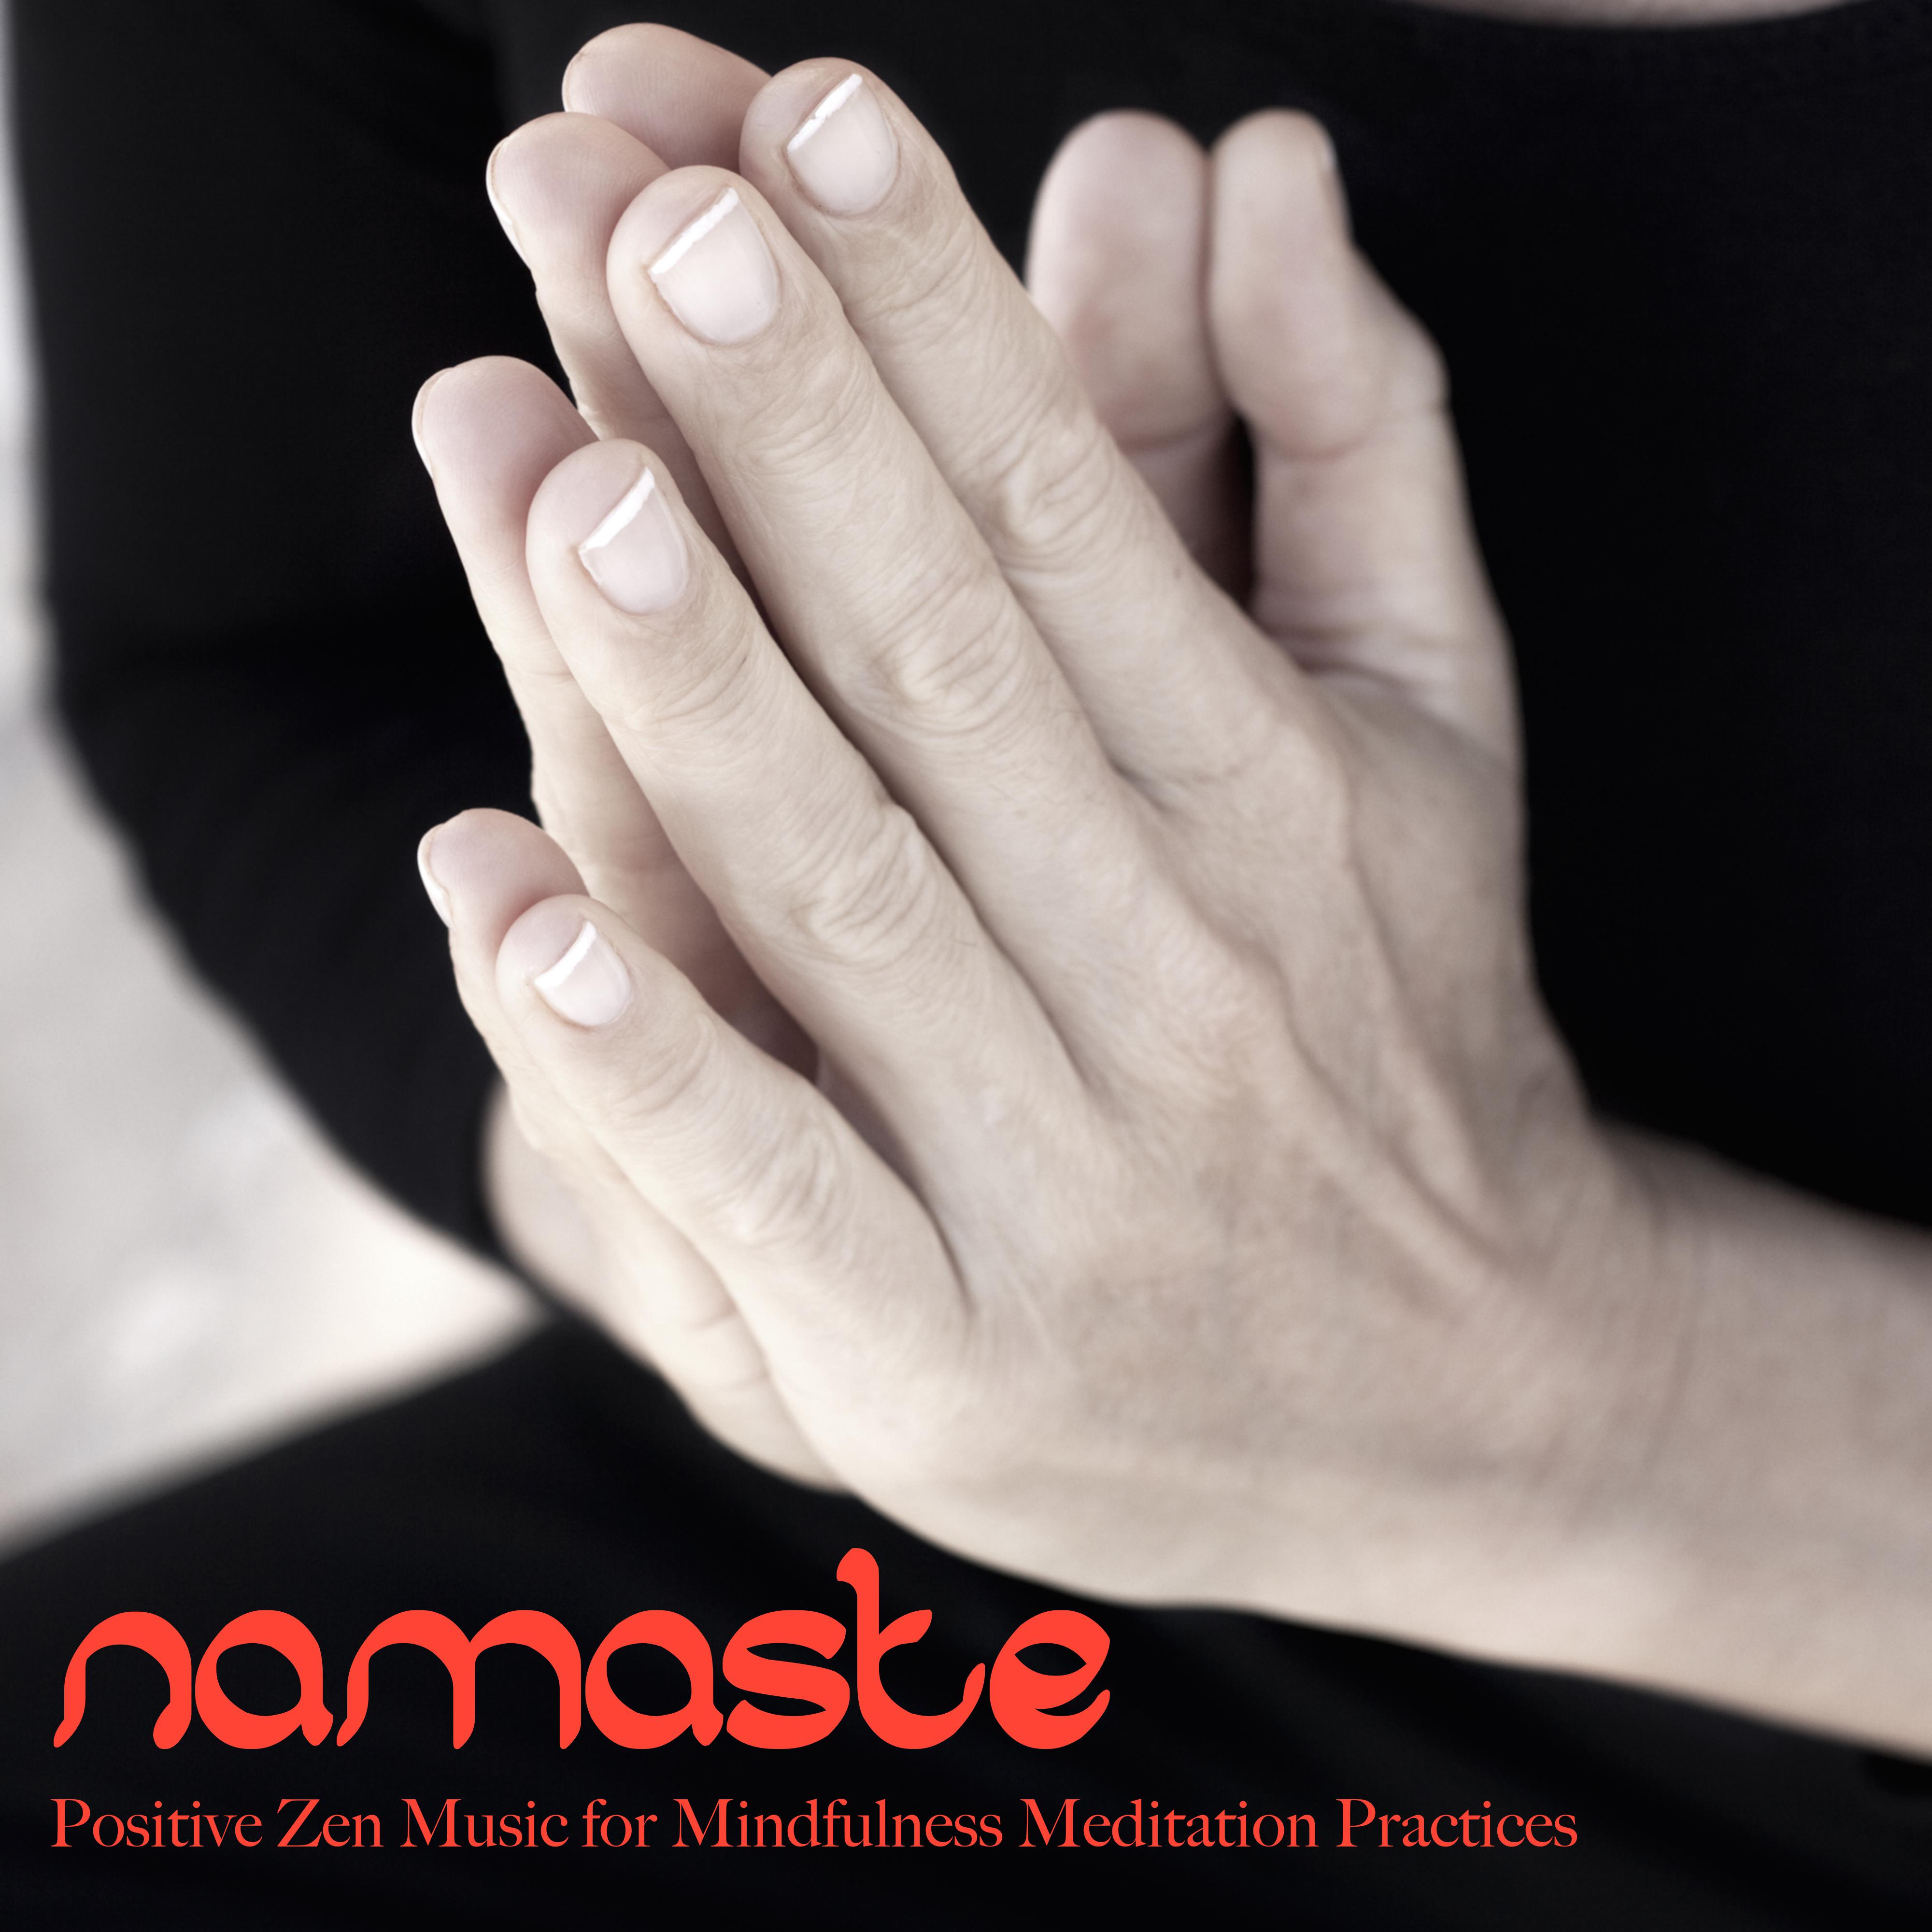 Namaste - Positive Zen Music for Mindfulness Meditation Practices